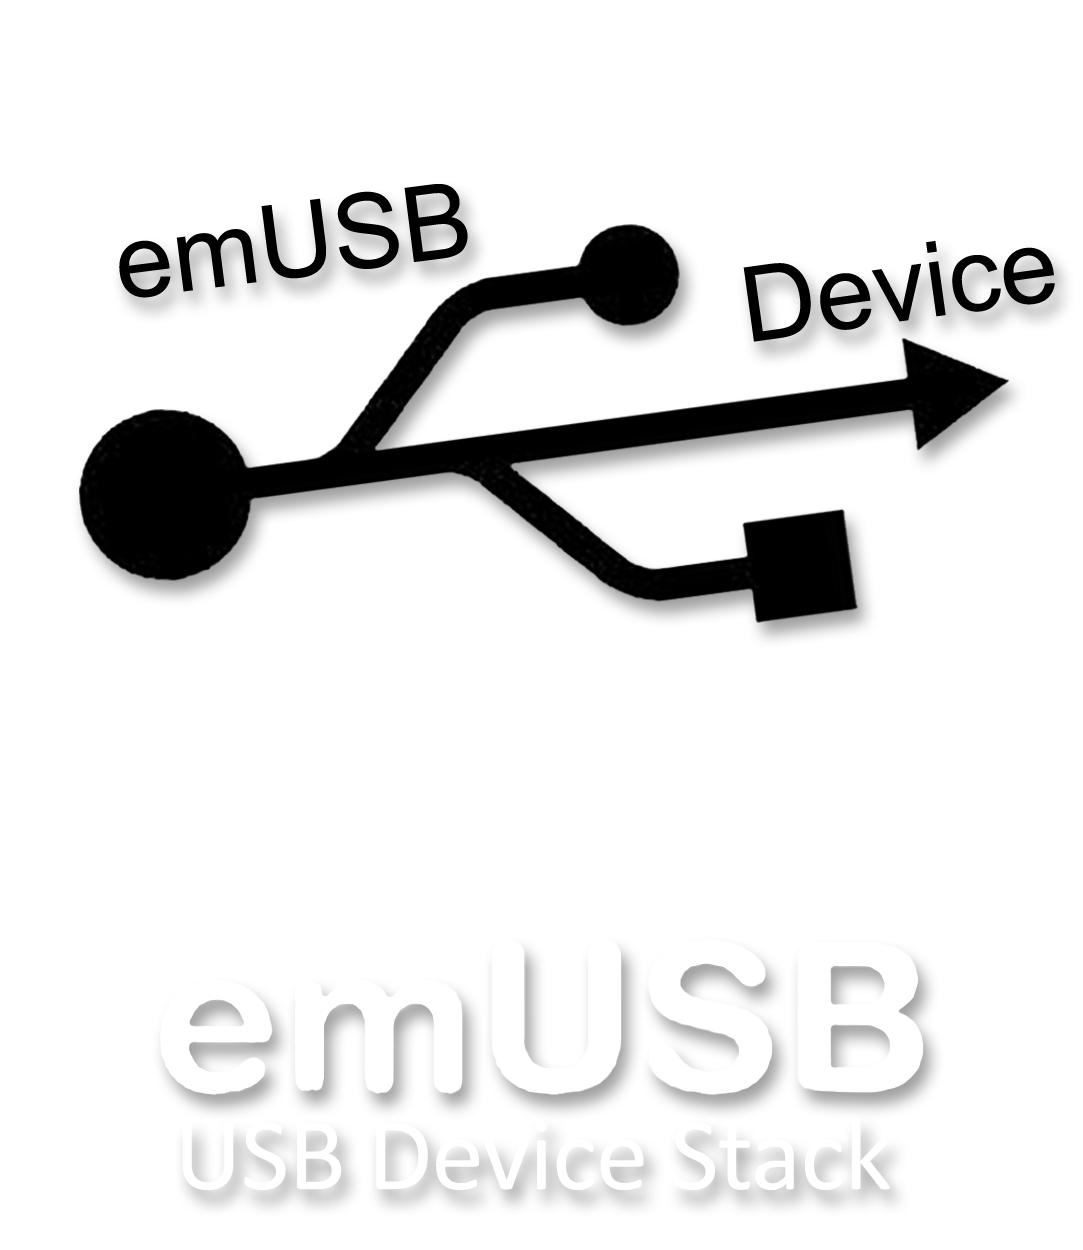 9.50.02 EMUSBDEVPROBNDLADDSEAT USB DEVICE, ADDN DEVELOPER LICENSE SEGGER